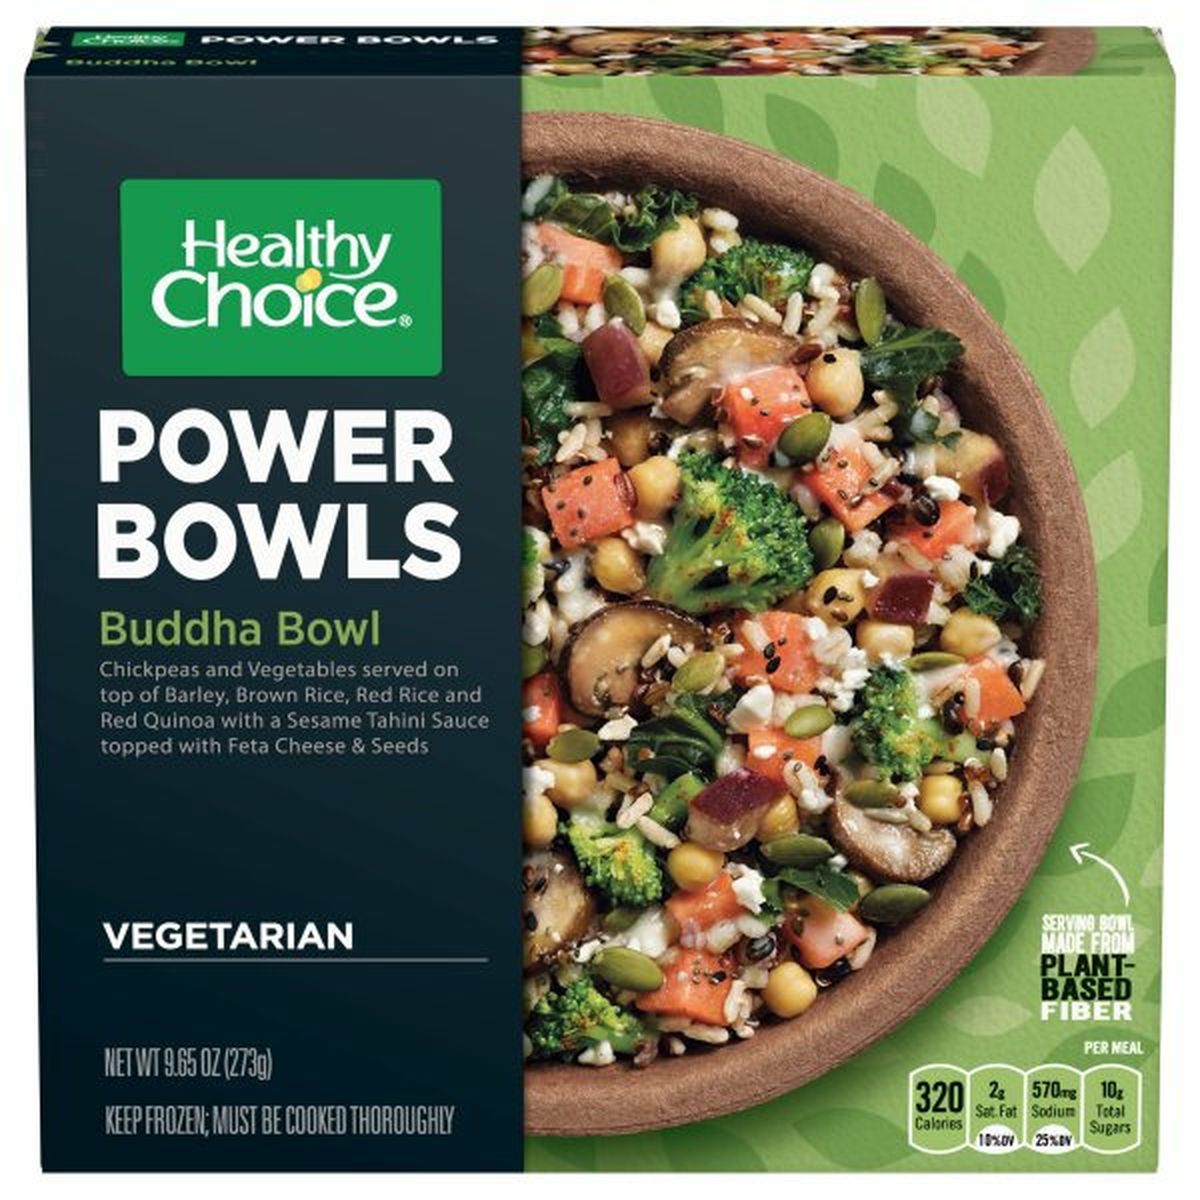 Calories in Healthy Choice Power Bowls, Buddha Bowl